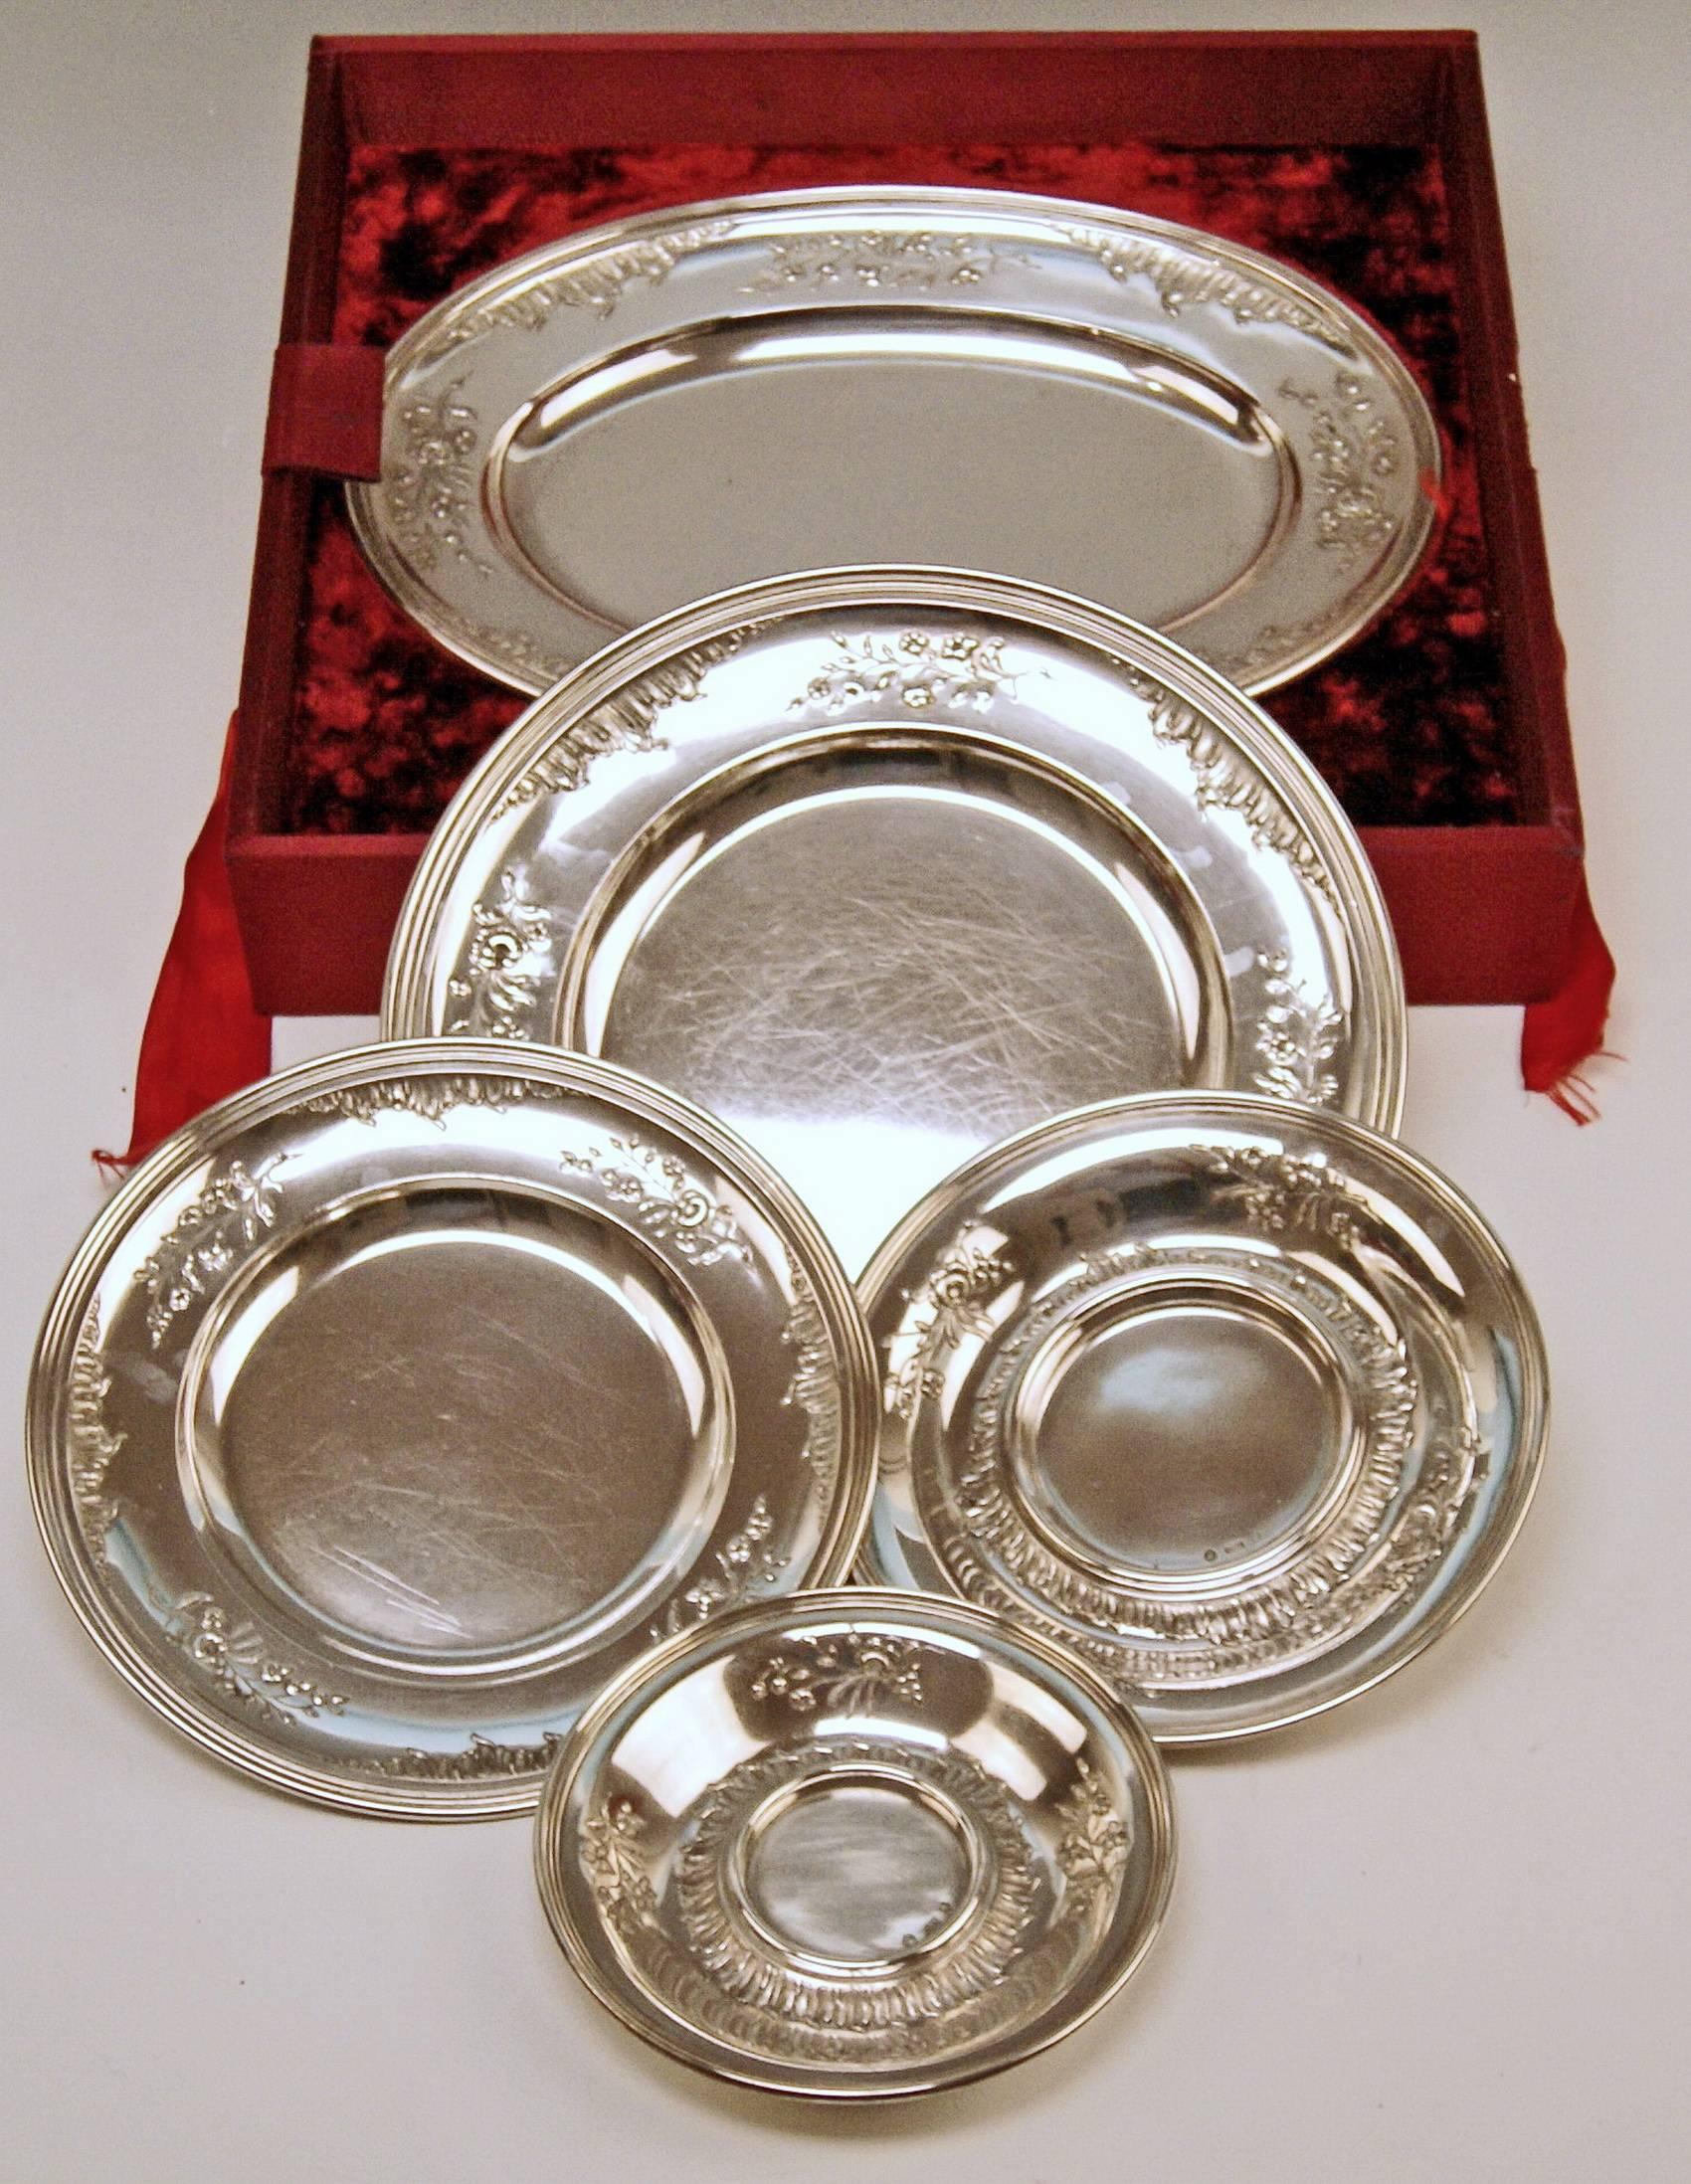 Silver Austria Vienna Set of Dishes Countess Sandizell-Lamberg by Klinkosch 6